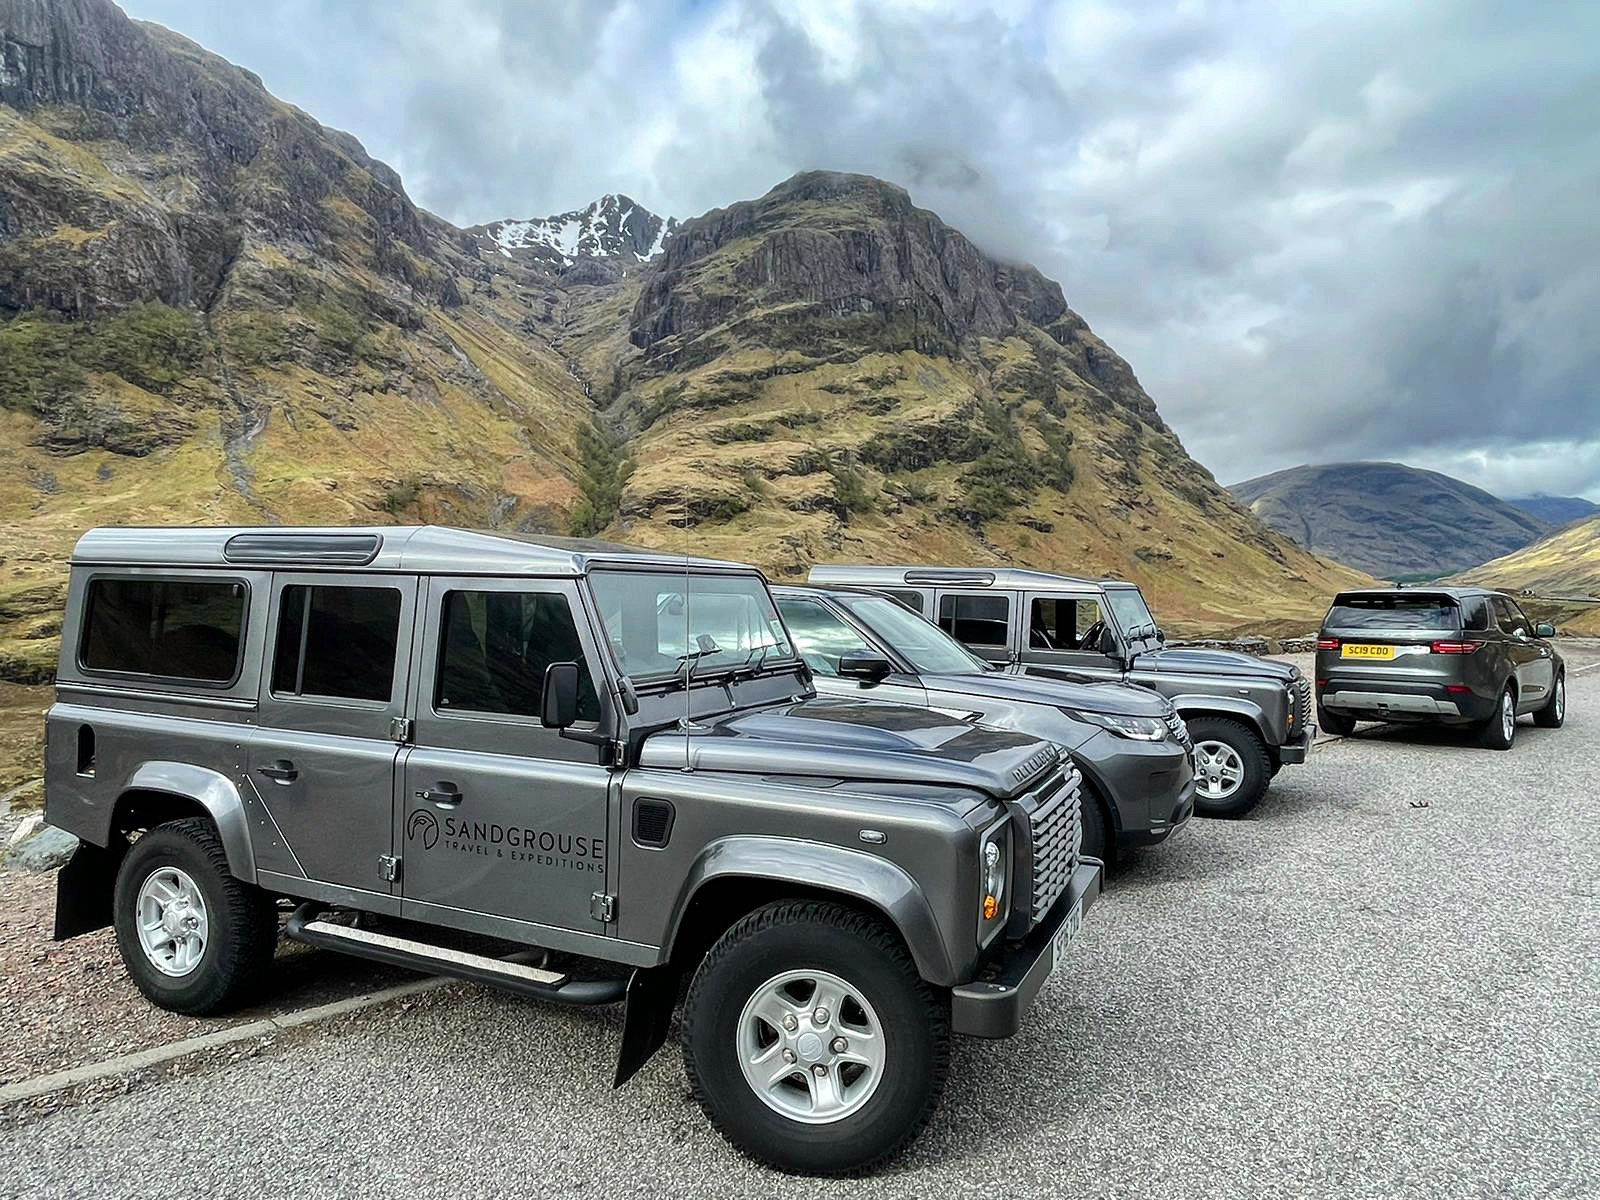 James Bond locations in Scotland - James Bond travel and lifestyle 